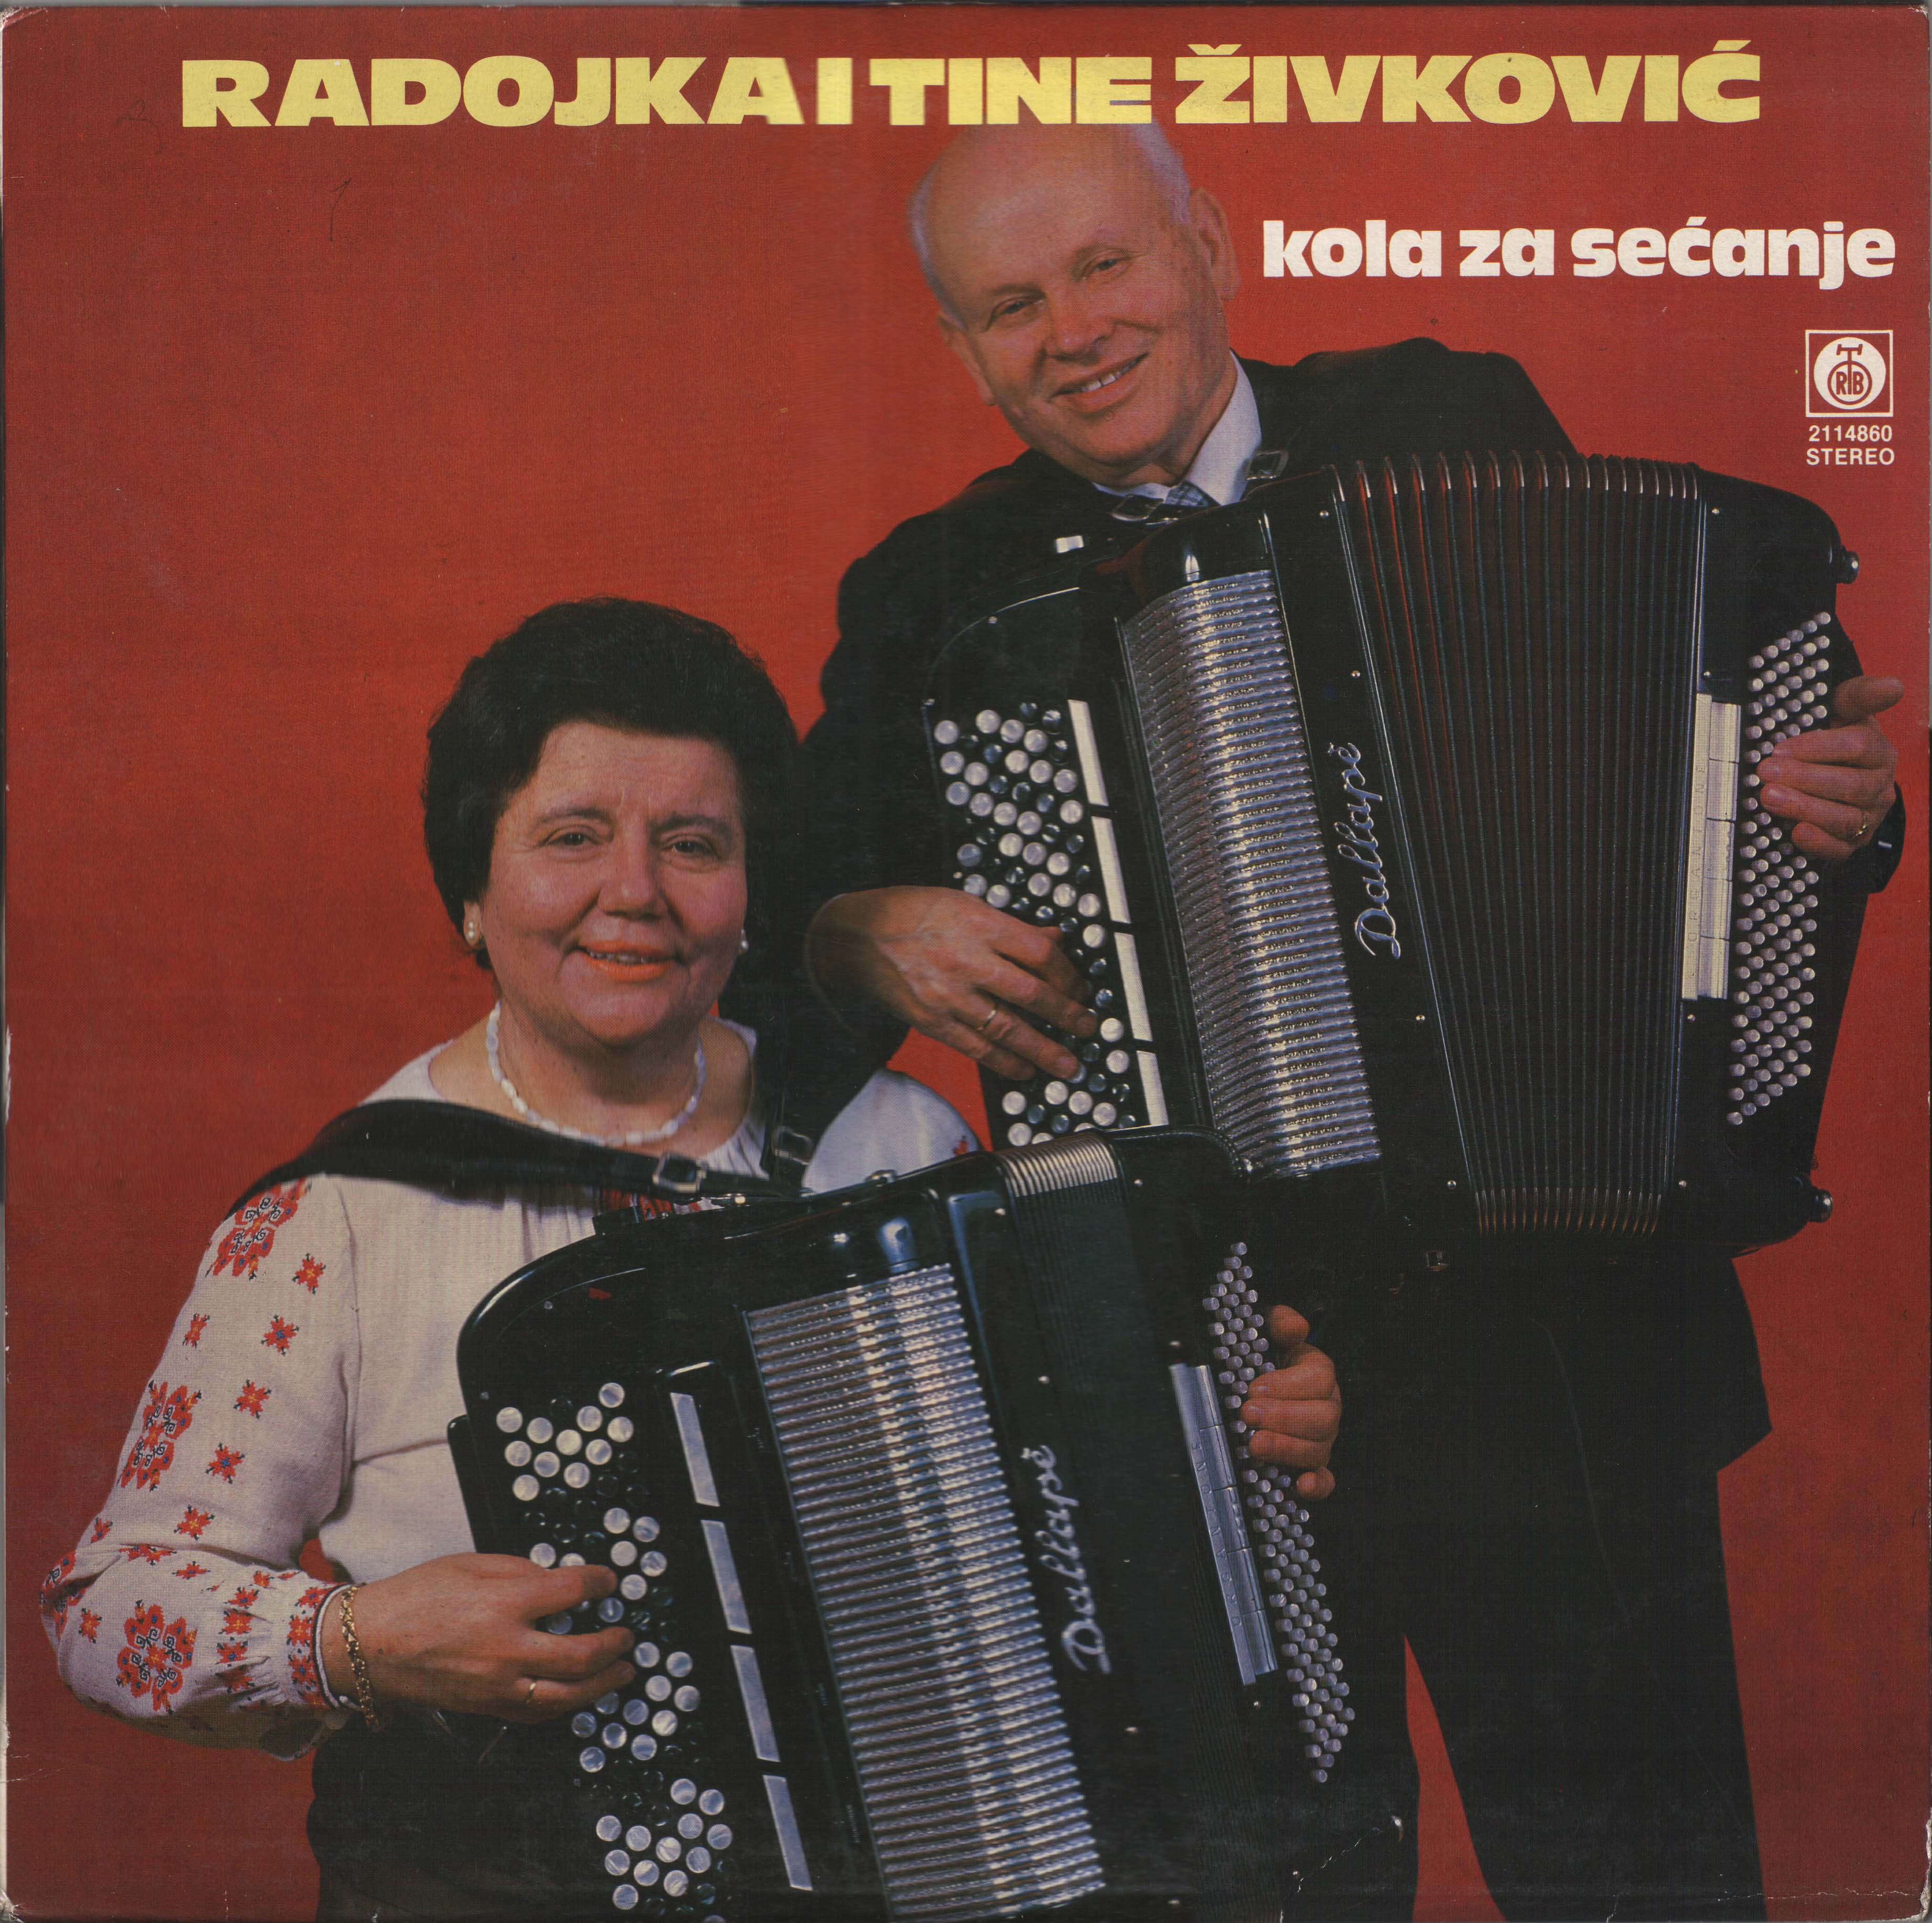 Radojka i Tine Zivkovic 1986 P